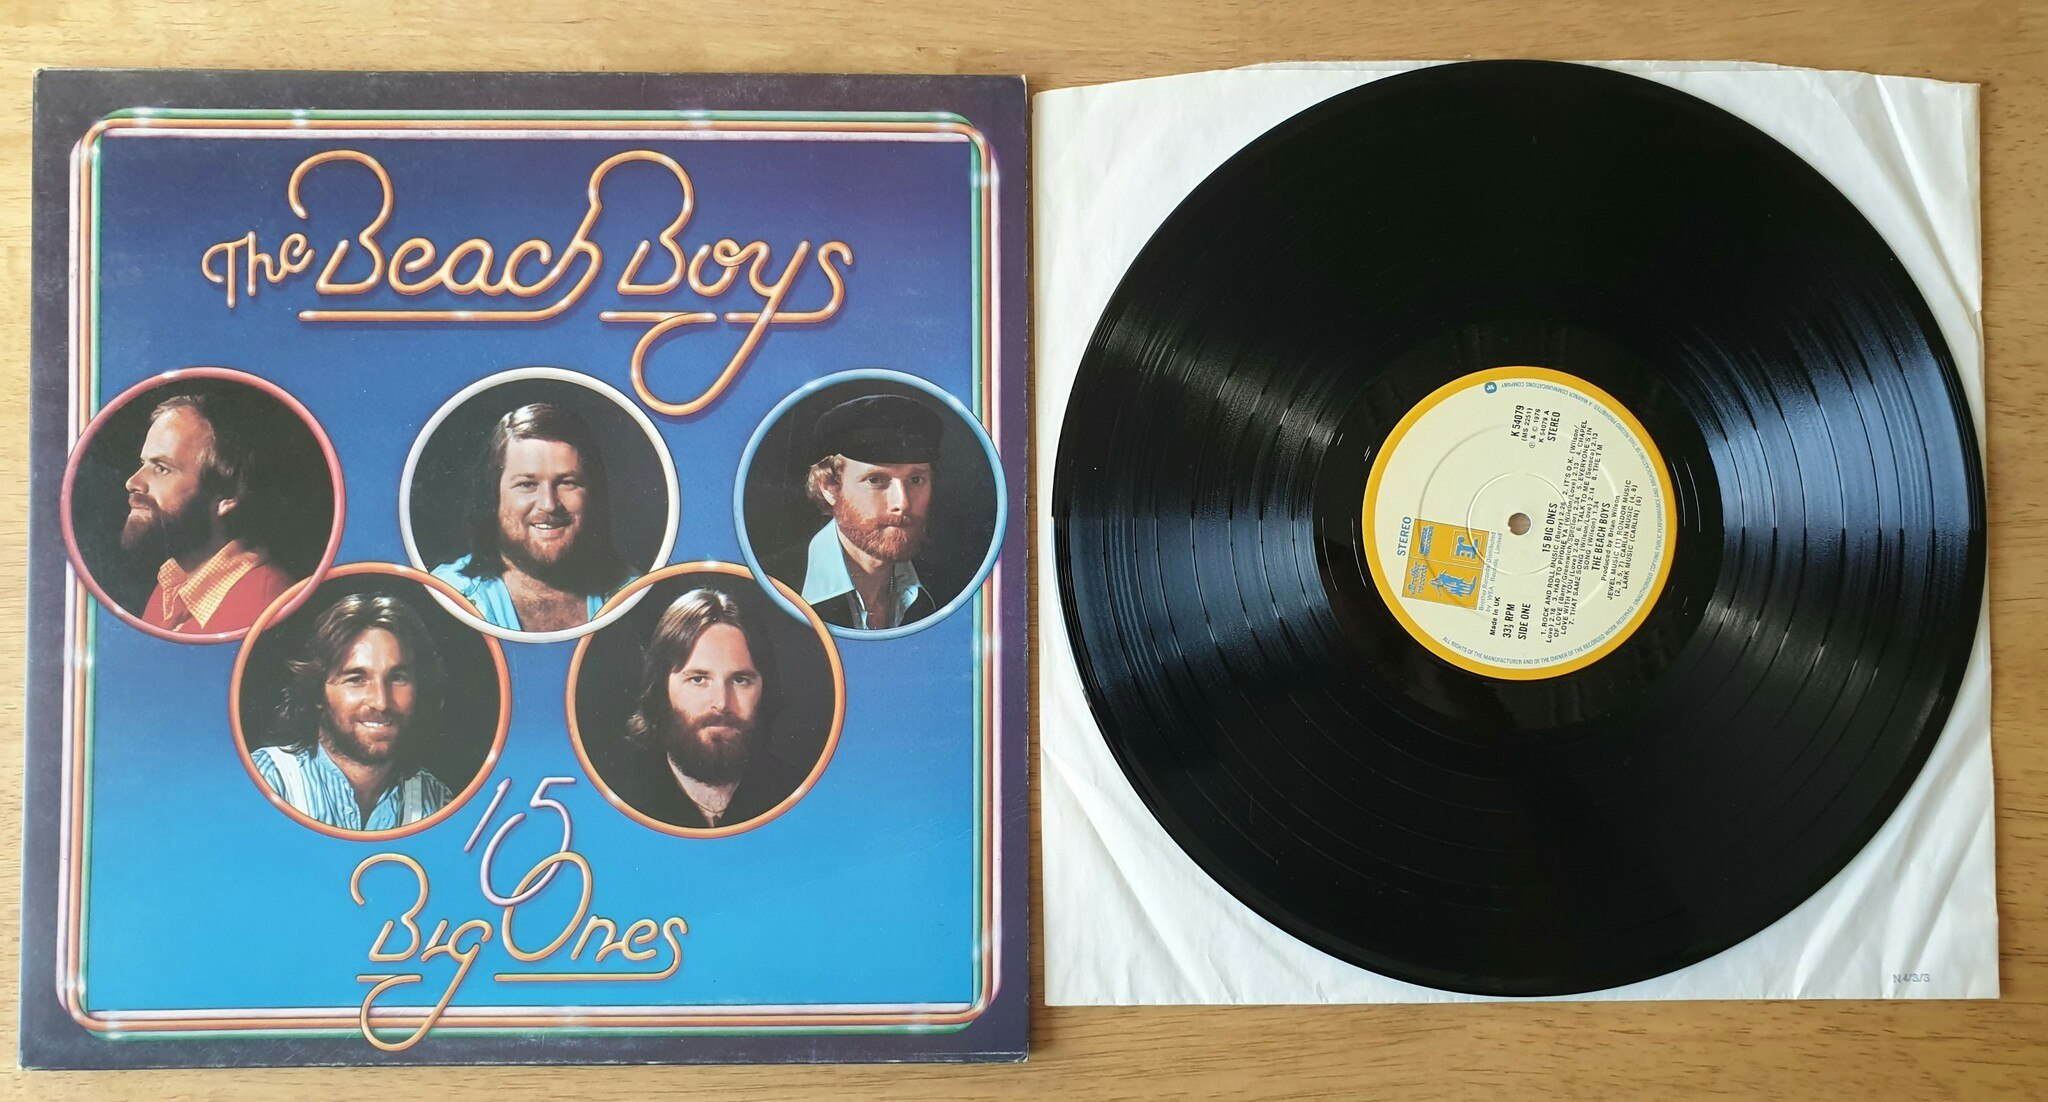 The Beach Boys, 15 big ones. Vinyl LP